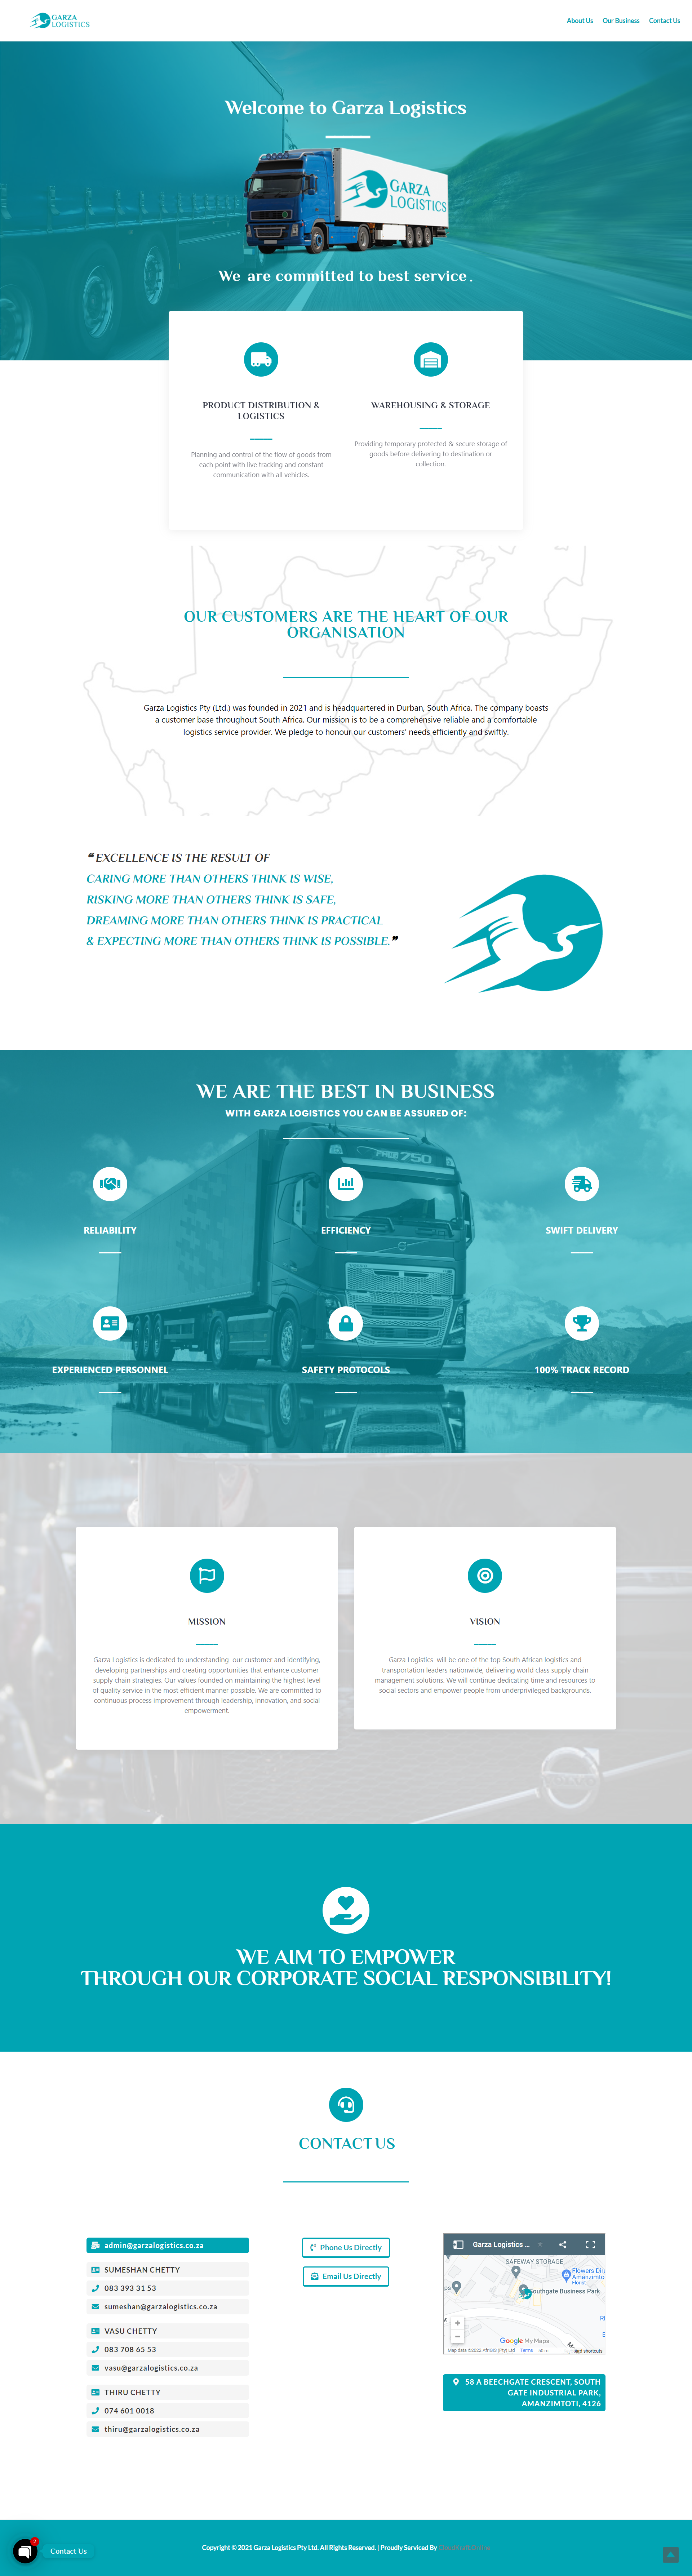 The final Garza Logistics website design layout showcasing the website sections